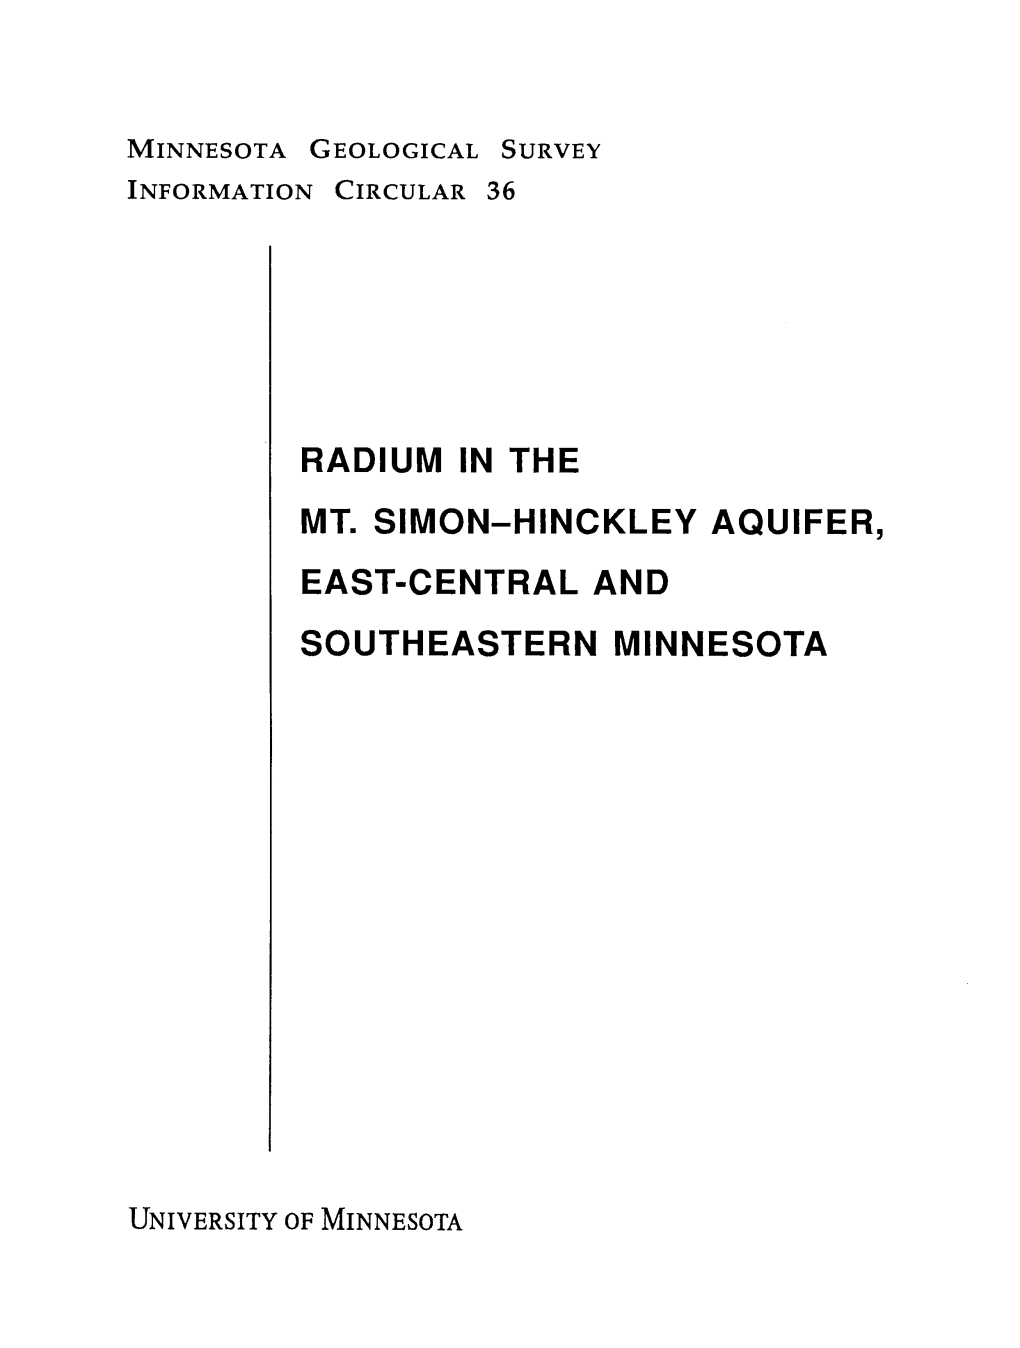 Radium in the Mt. Simon-Hinckley Aquifer, East-Central and Southeastern Minnesota